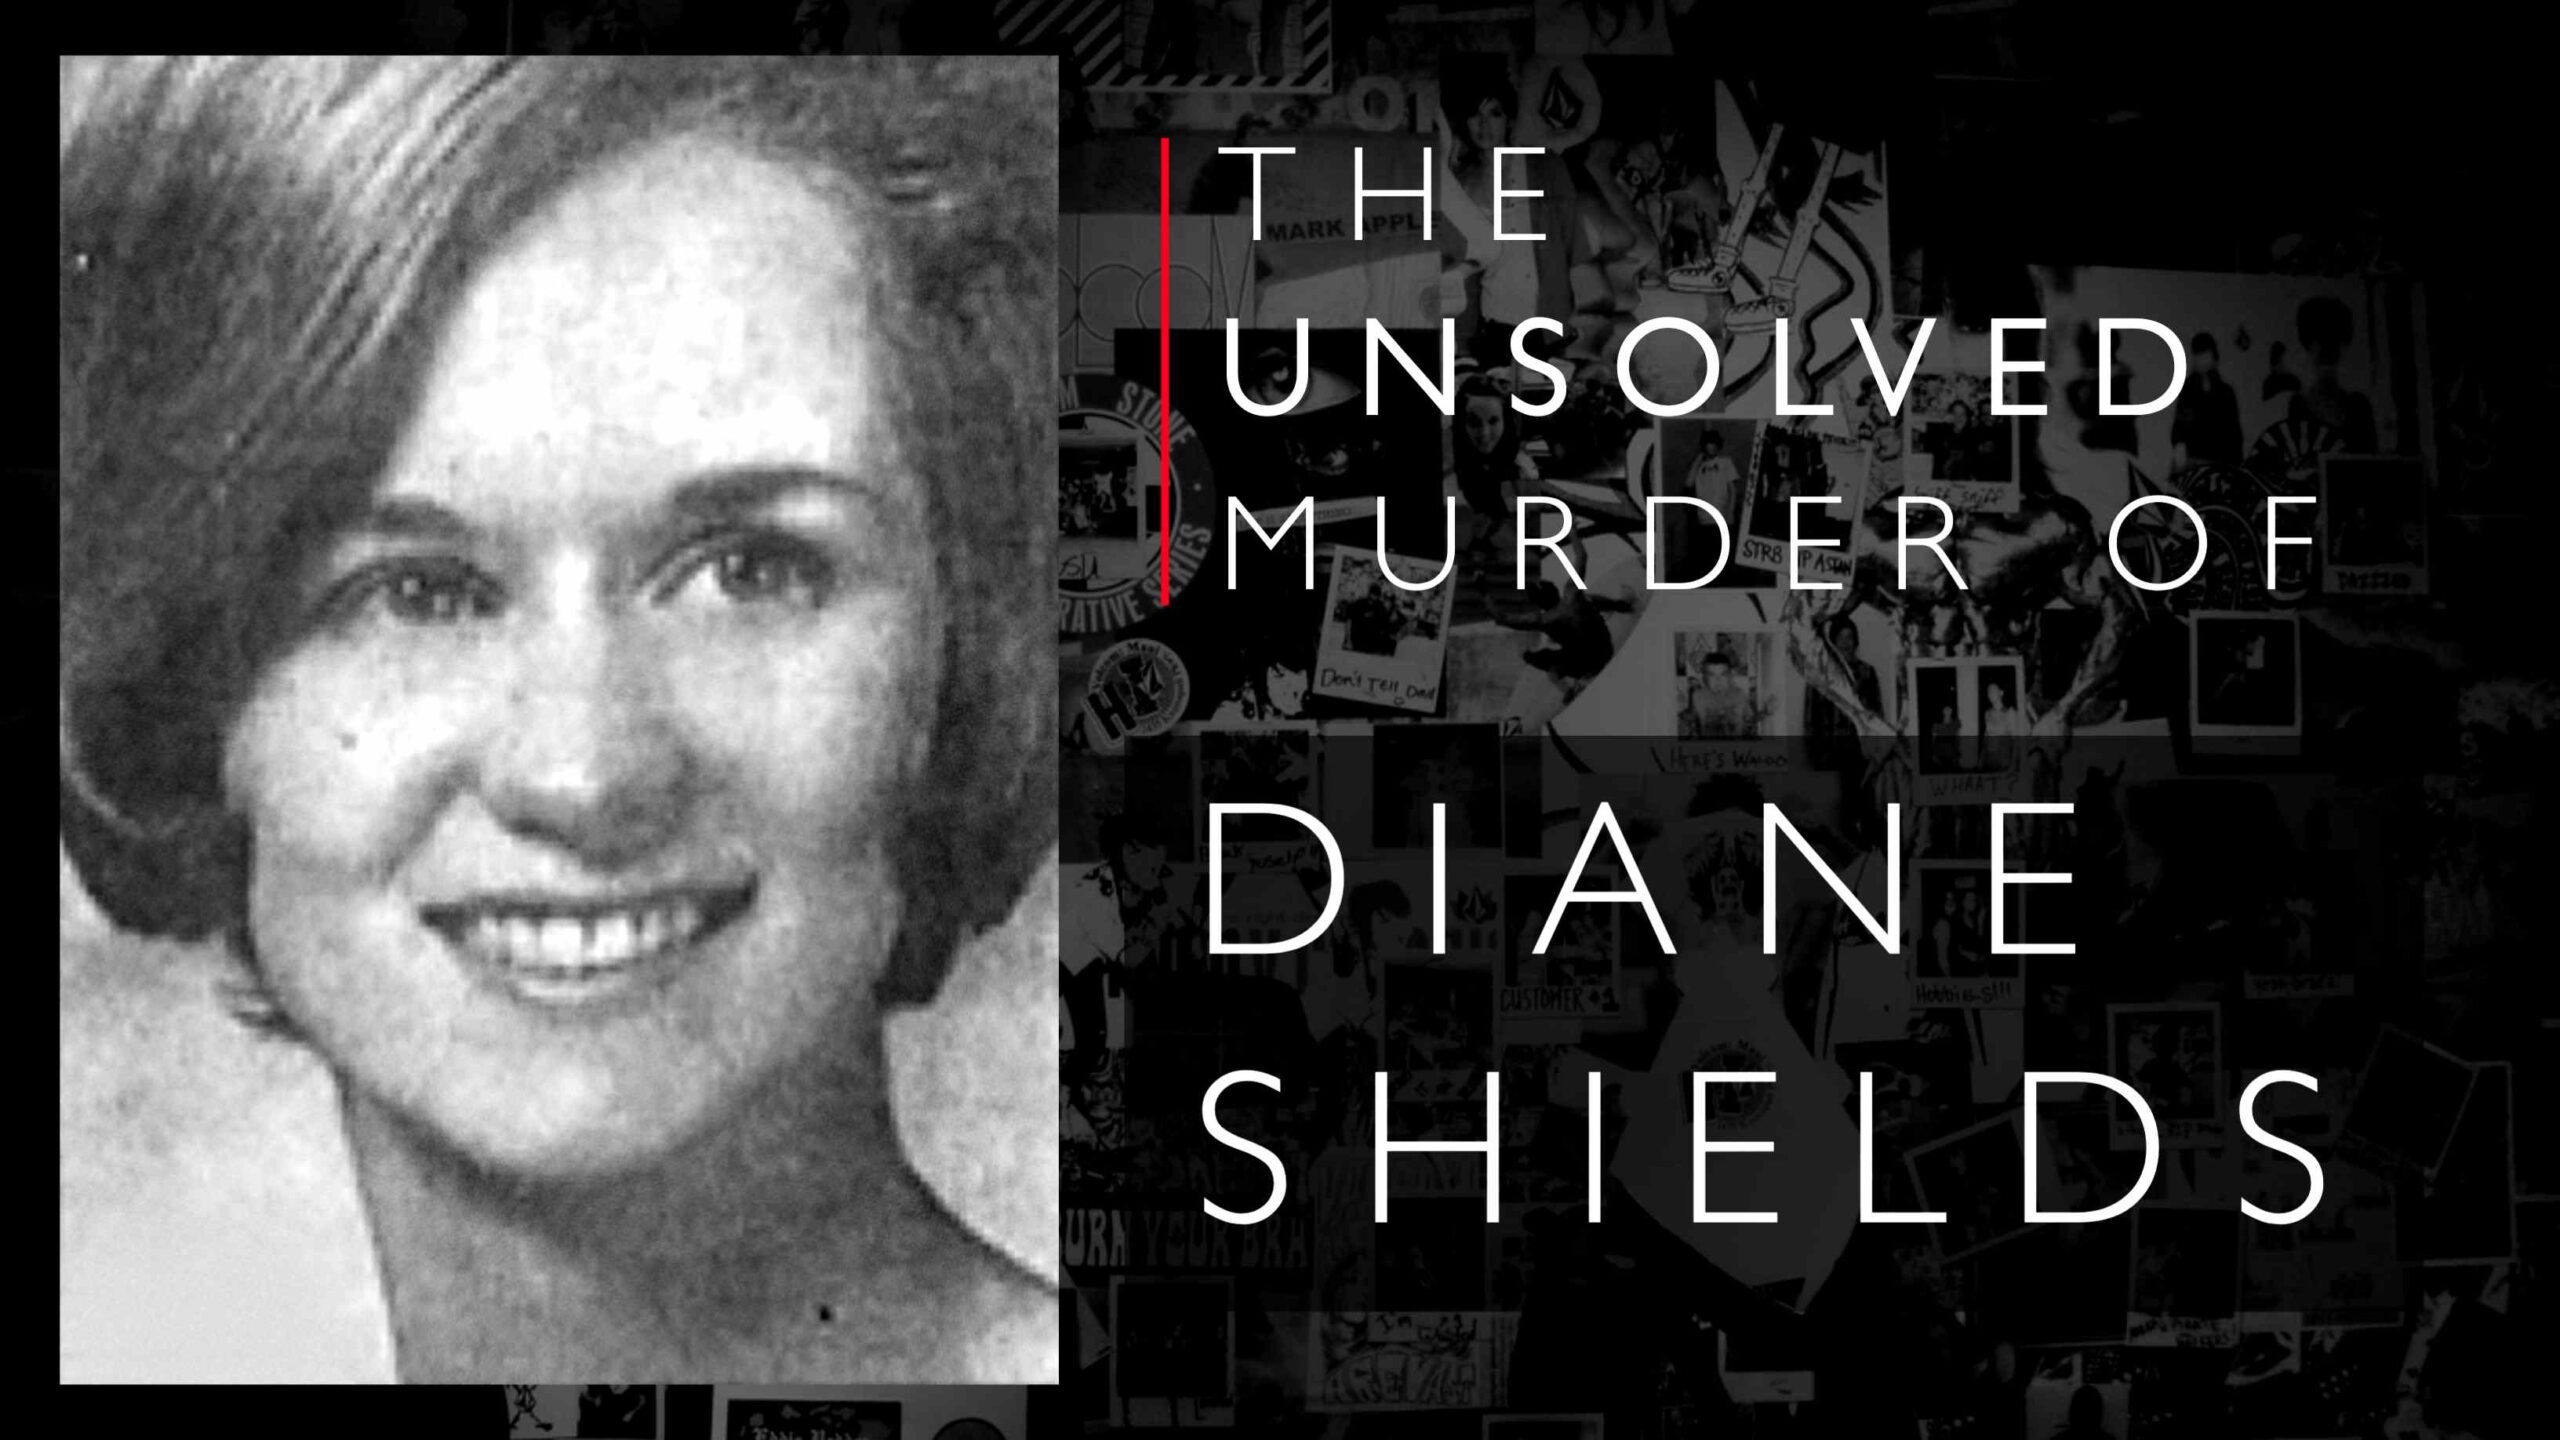 Diane Shields는 어떤 면에서 Mary Shotwell Little의 발자취를 따랐다가 살해된 채로 발견되었습니다.